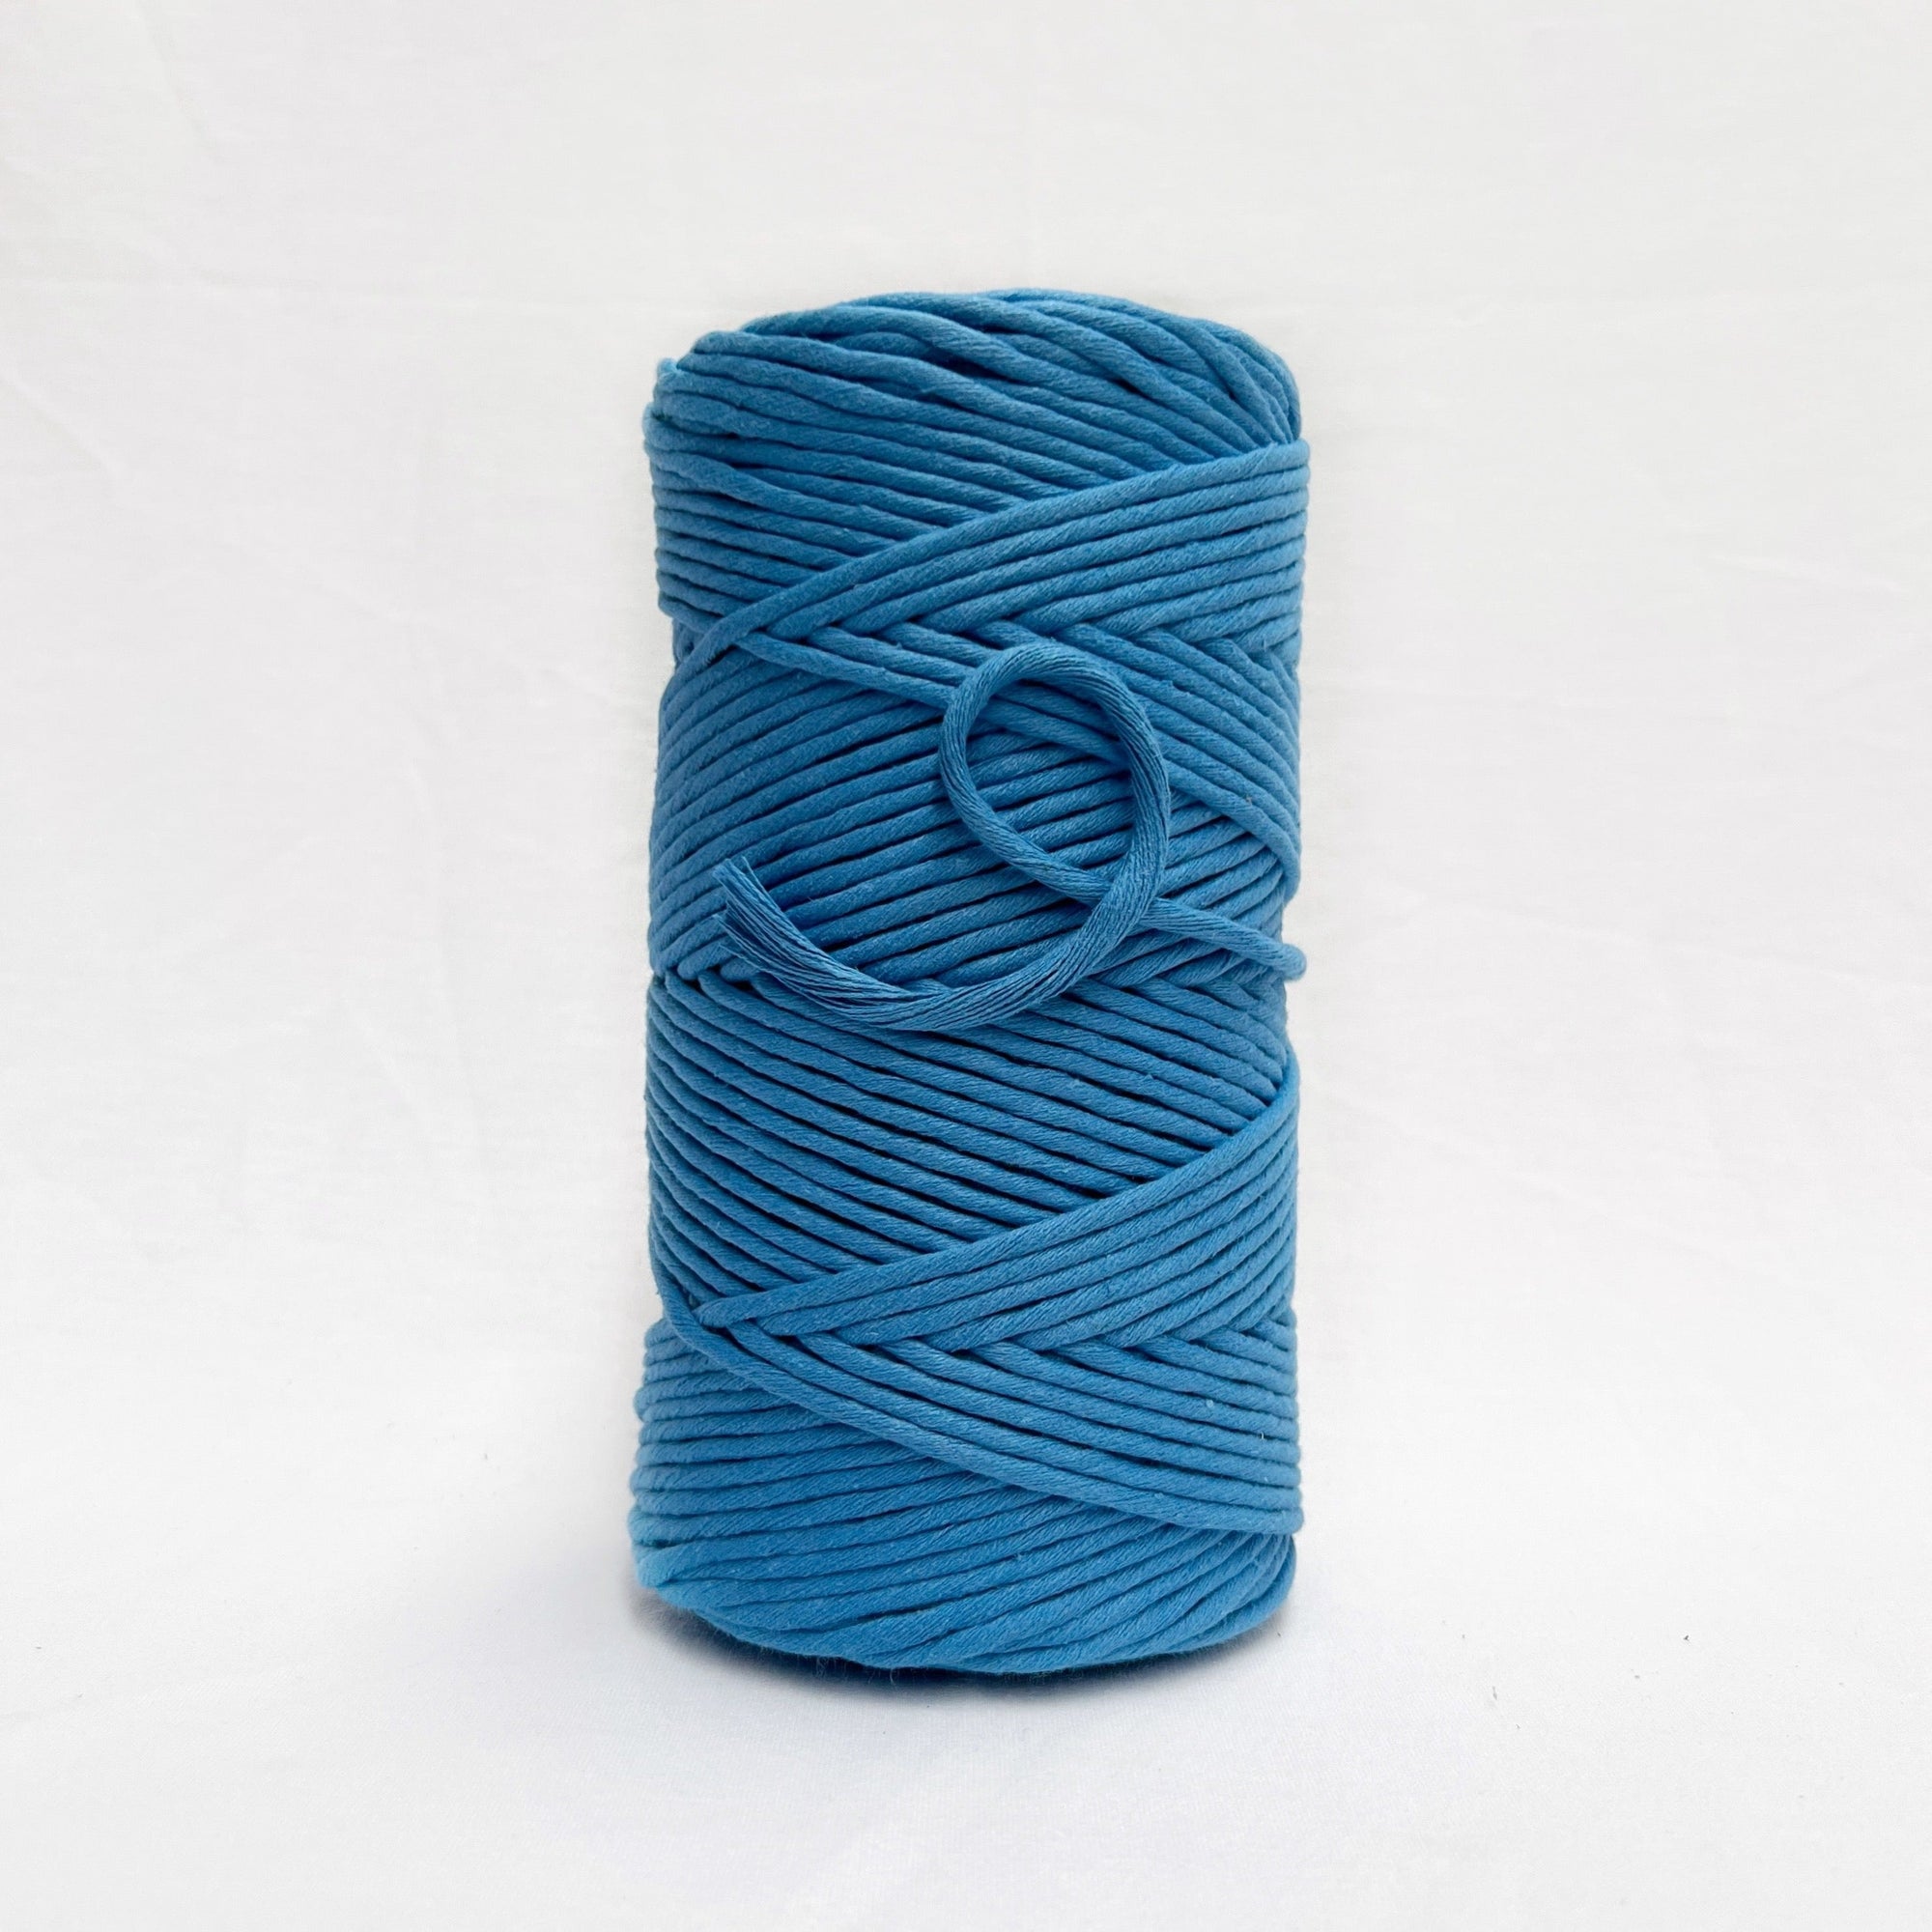 Mary Maker Studio 5mm 1kg Recycled Luxe Macrame String // Bondi Blue macrame cotton macrame rope macrame workshop macrame patterns macrame